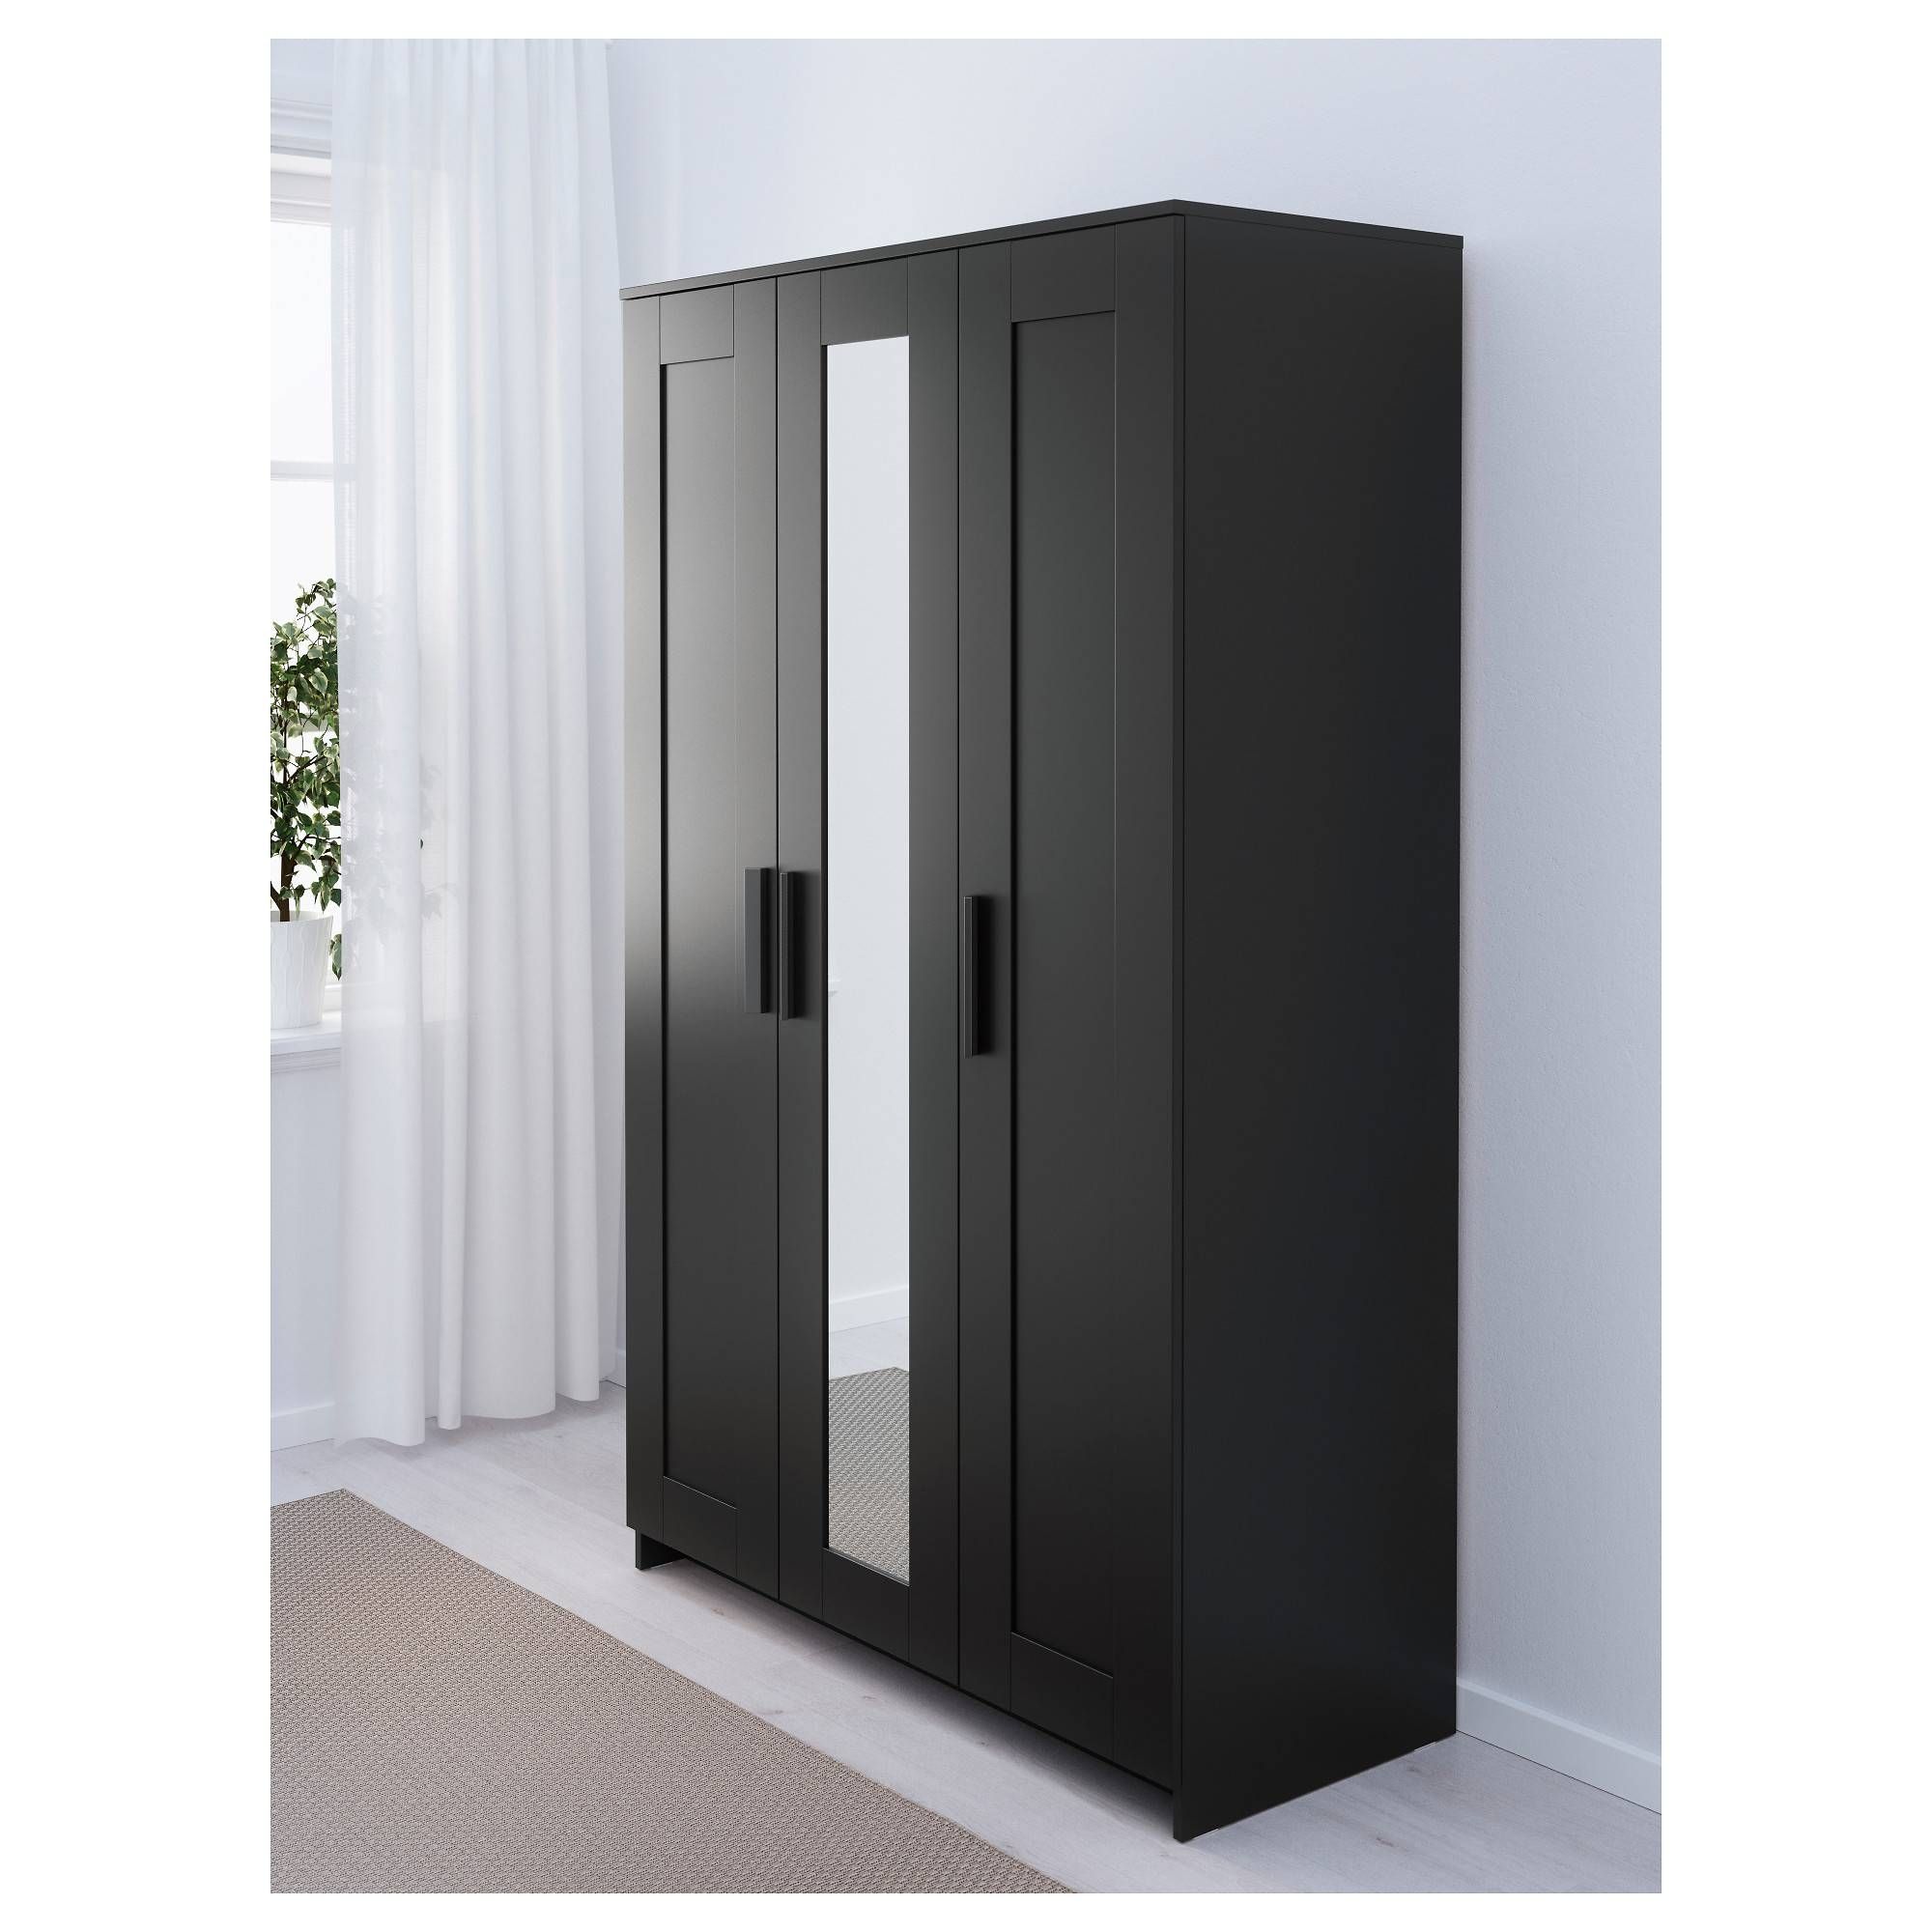 Brimnes Wardrobe With 3 Doors – White – Ikea Throughout White Three Door Wardrobes (View 10 of 15)